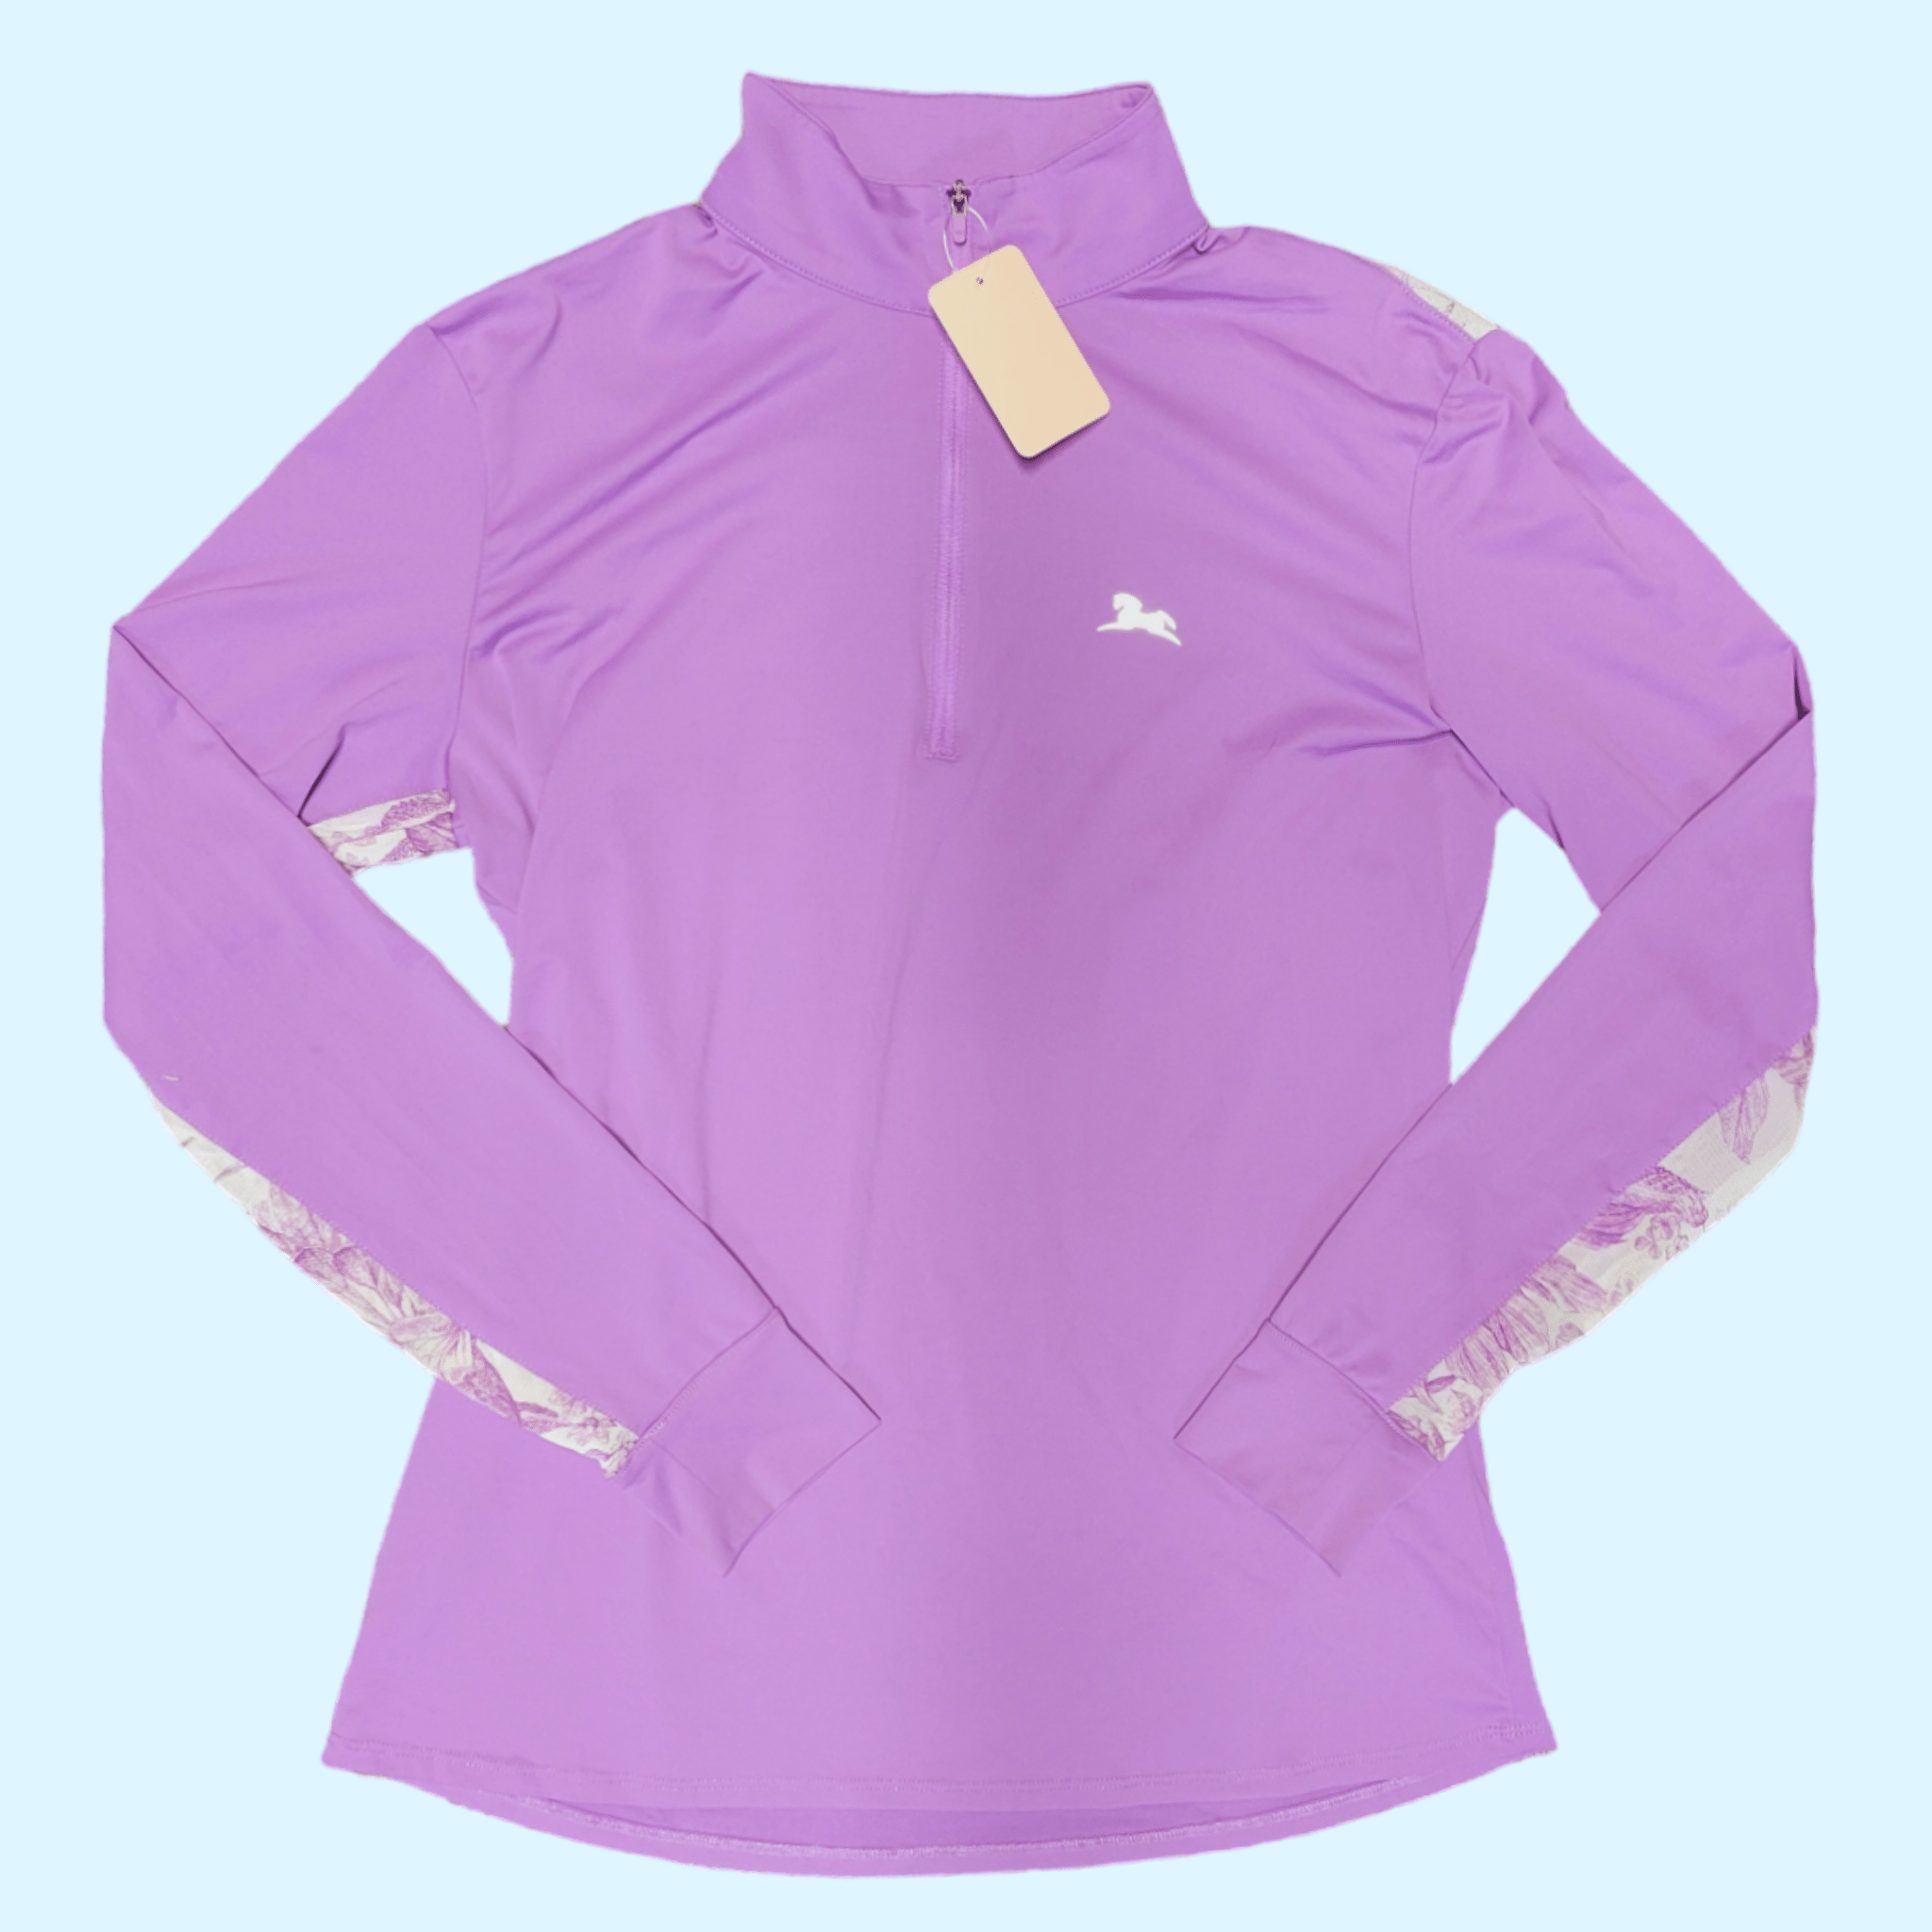 RJ Classics Long Sleeve Training Shirt in Purple - Large